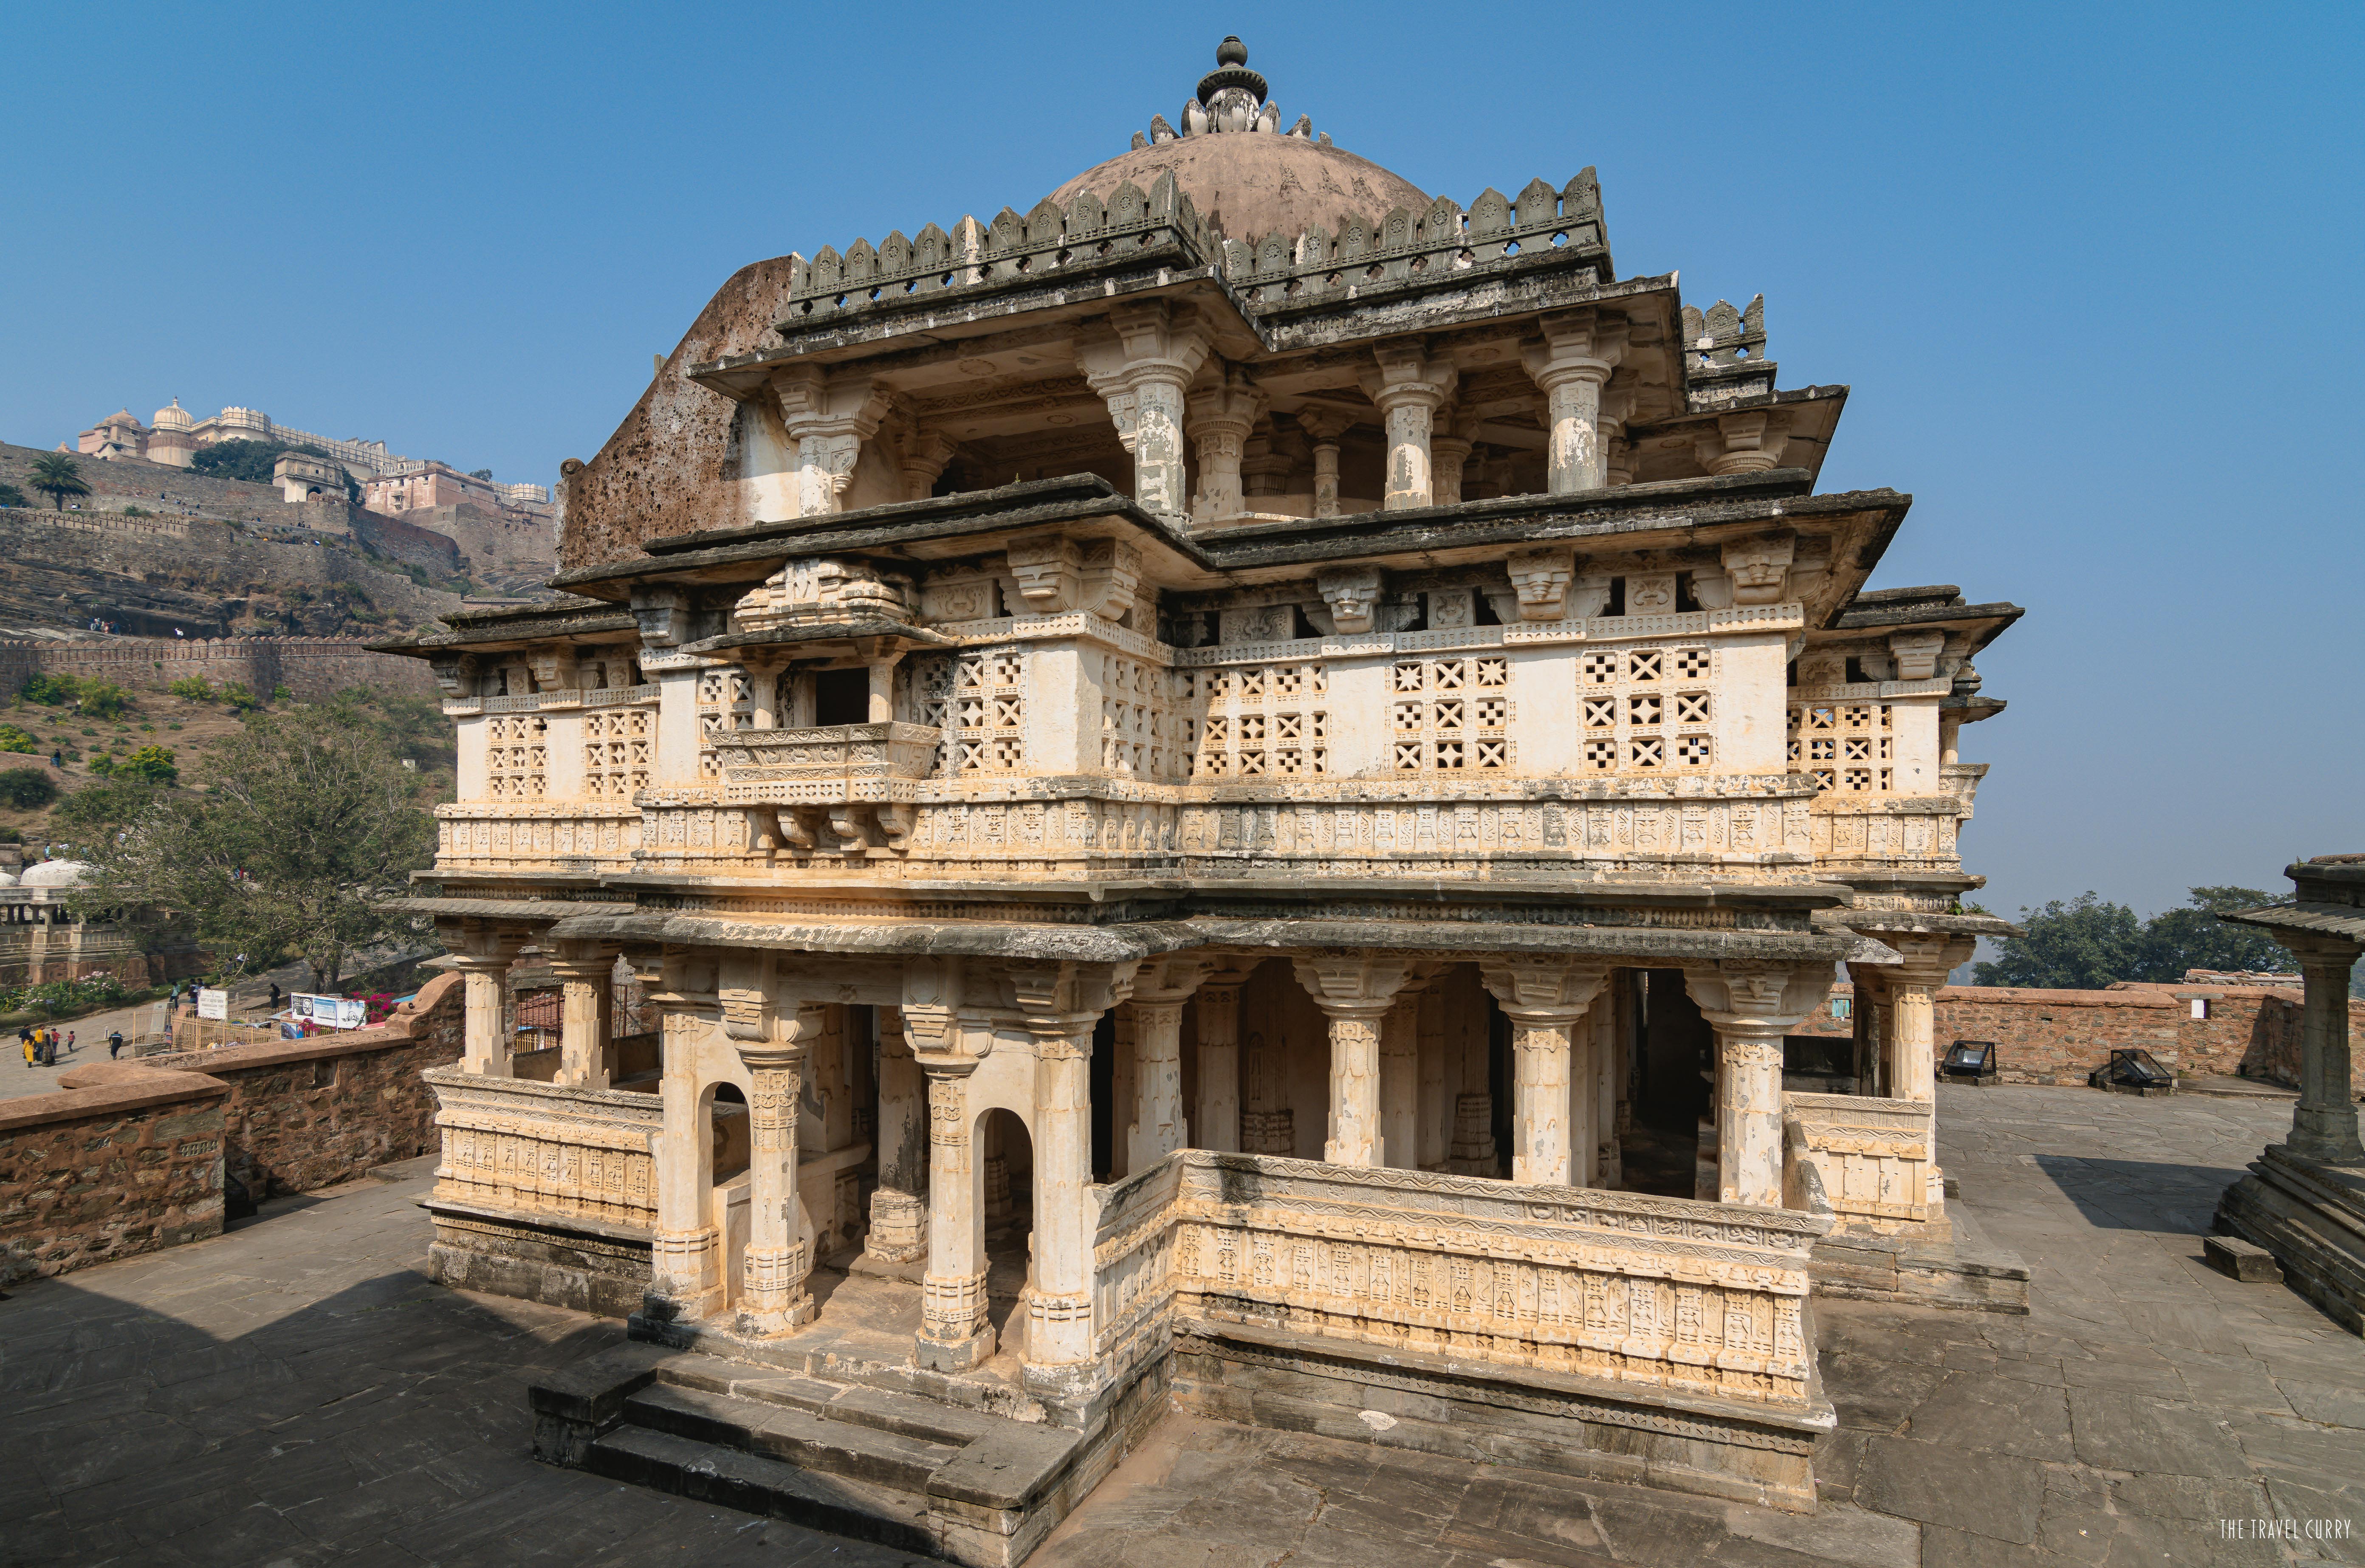 The Hindu Temple facing the Jain Temple 